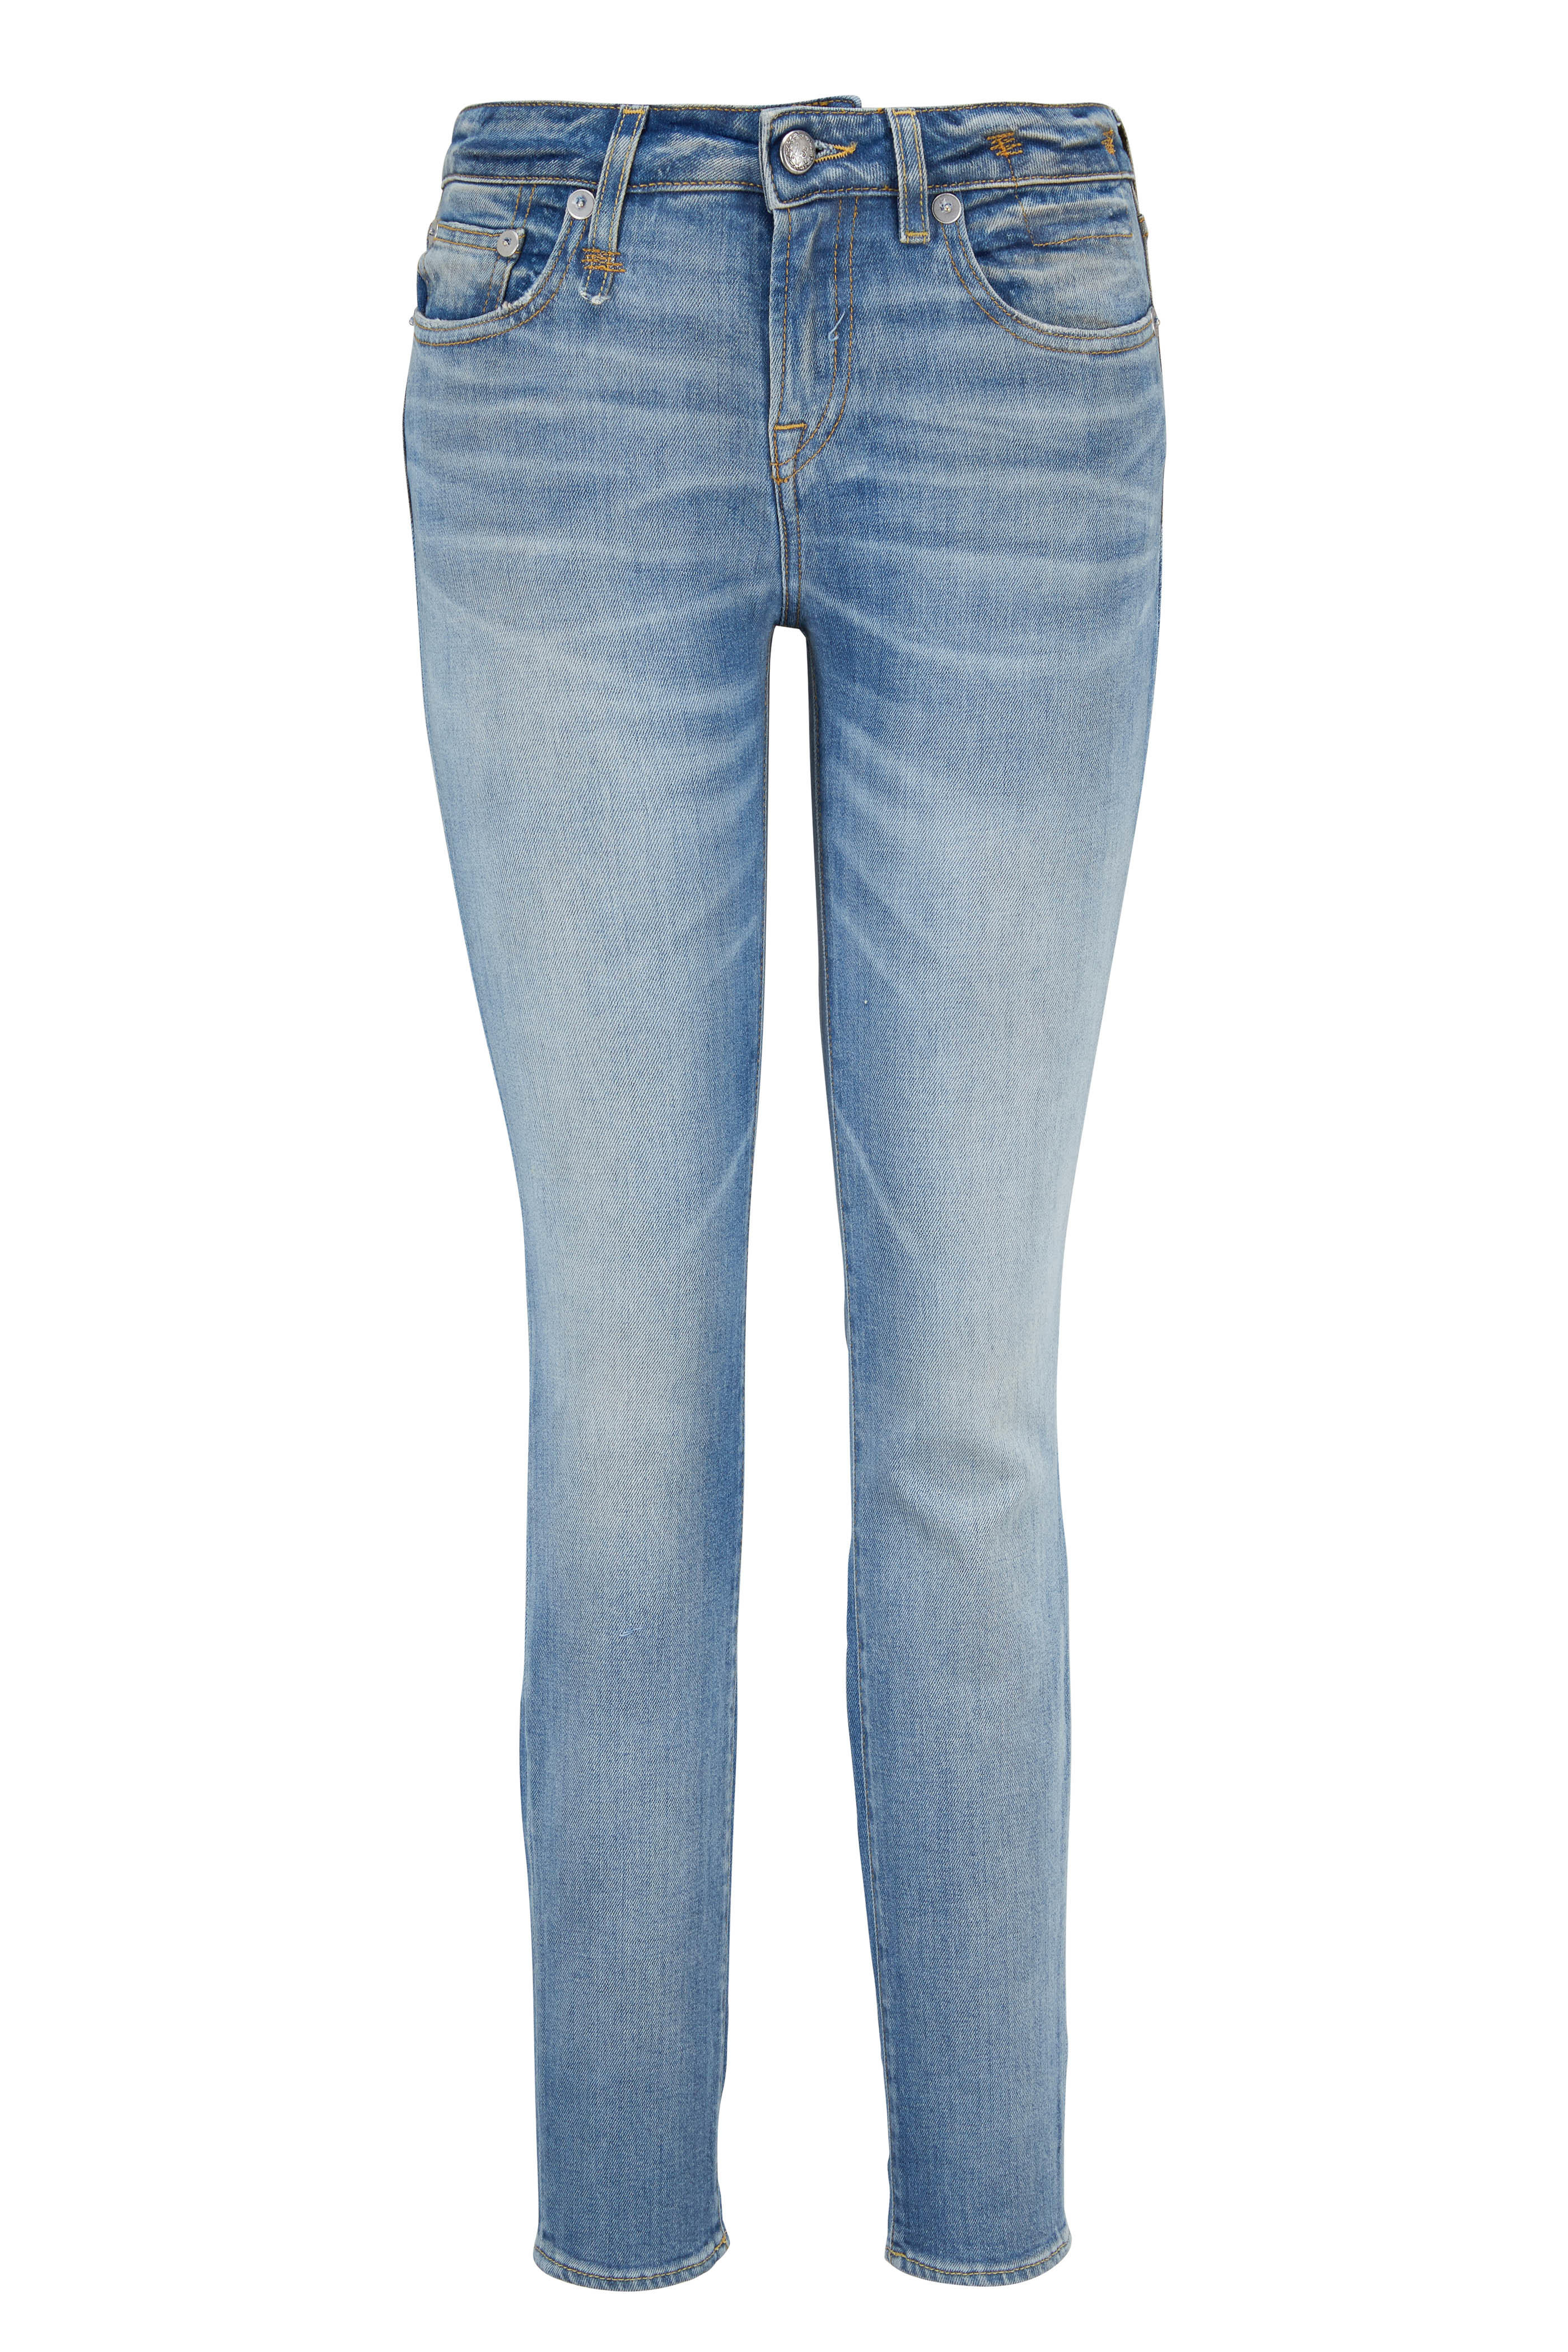 r13 alison skinny jeans